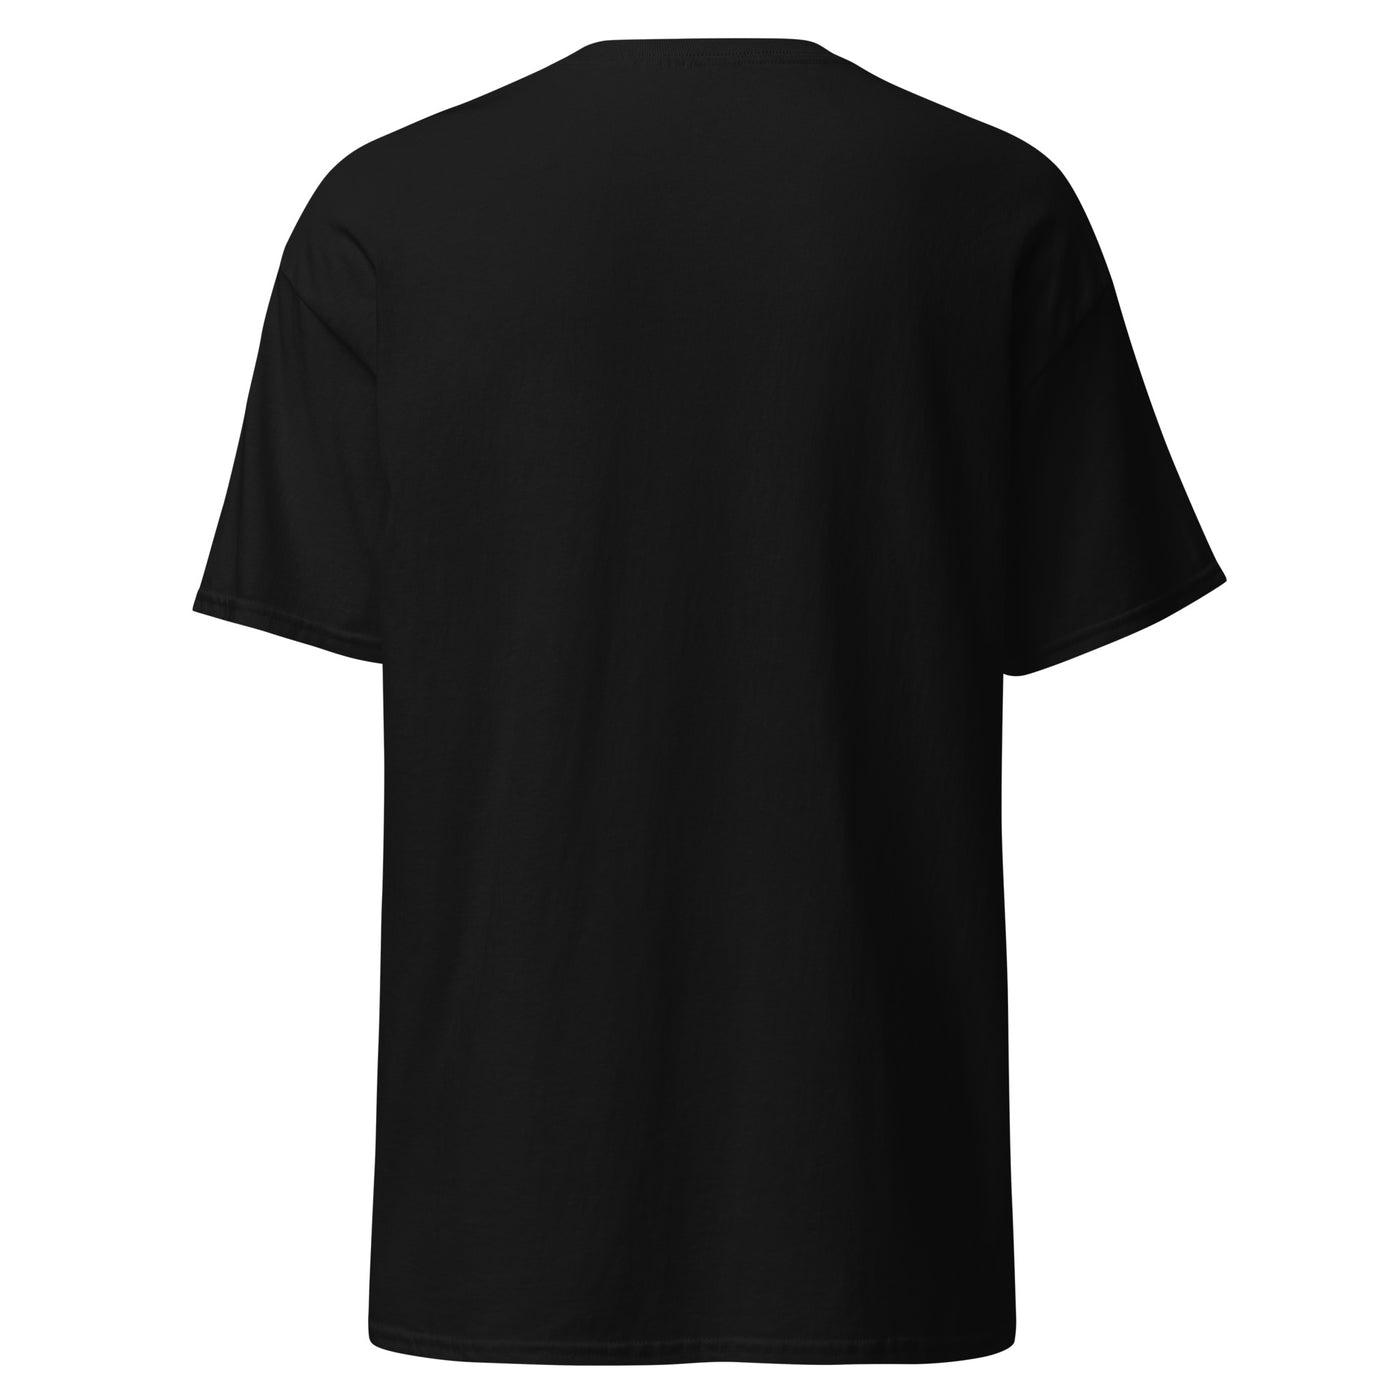 OYWO 'the 30 &gt; life' Black Unisex T-Shirt